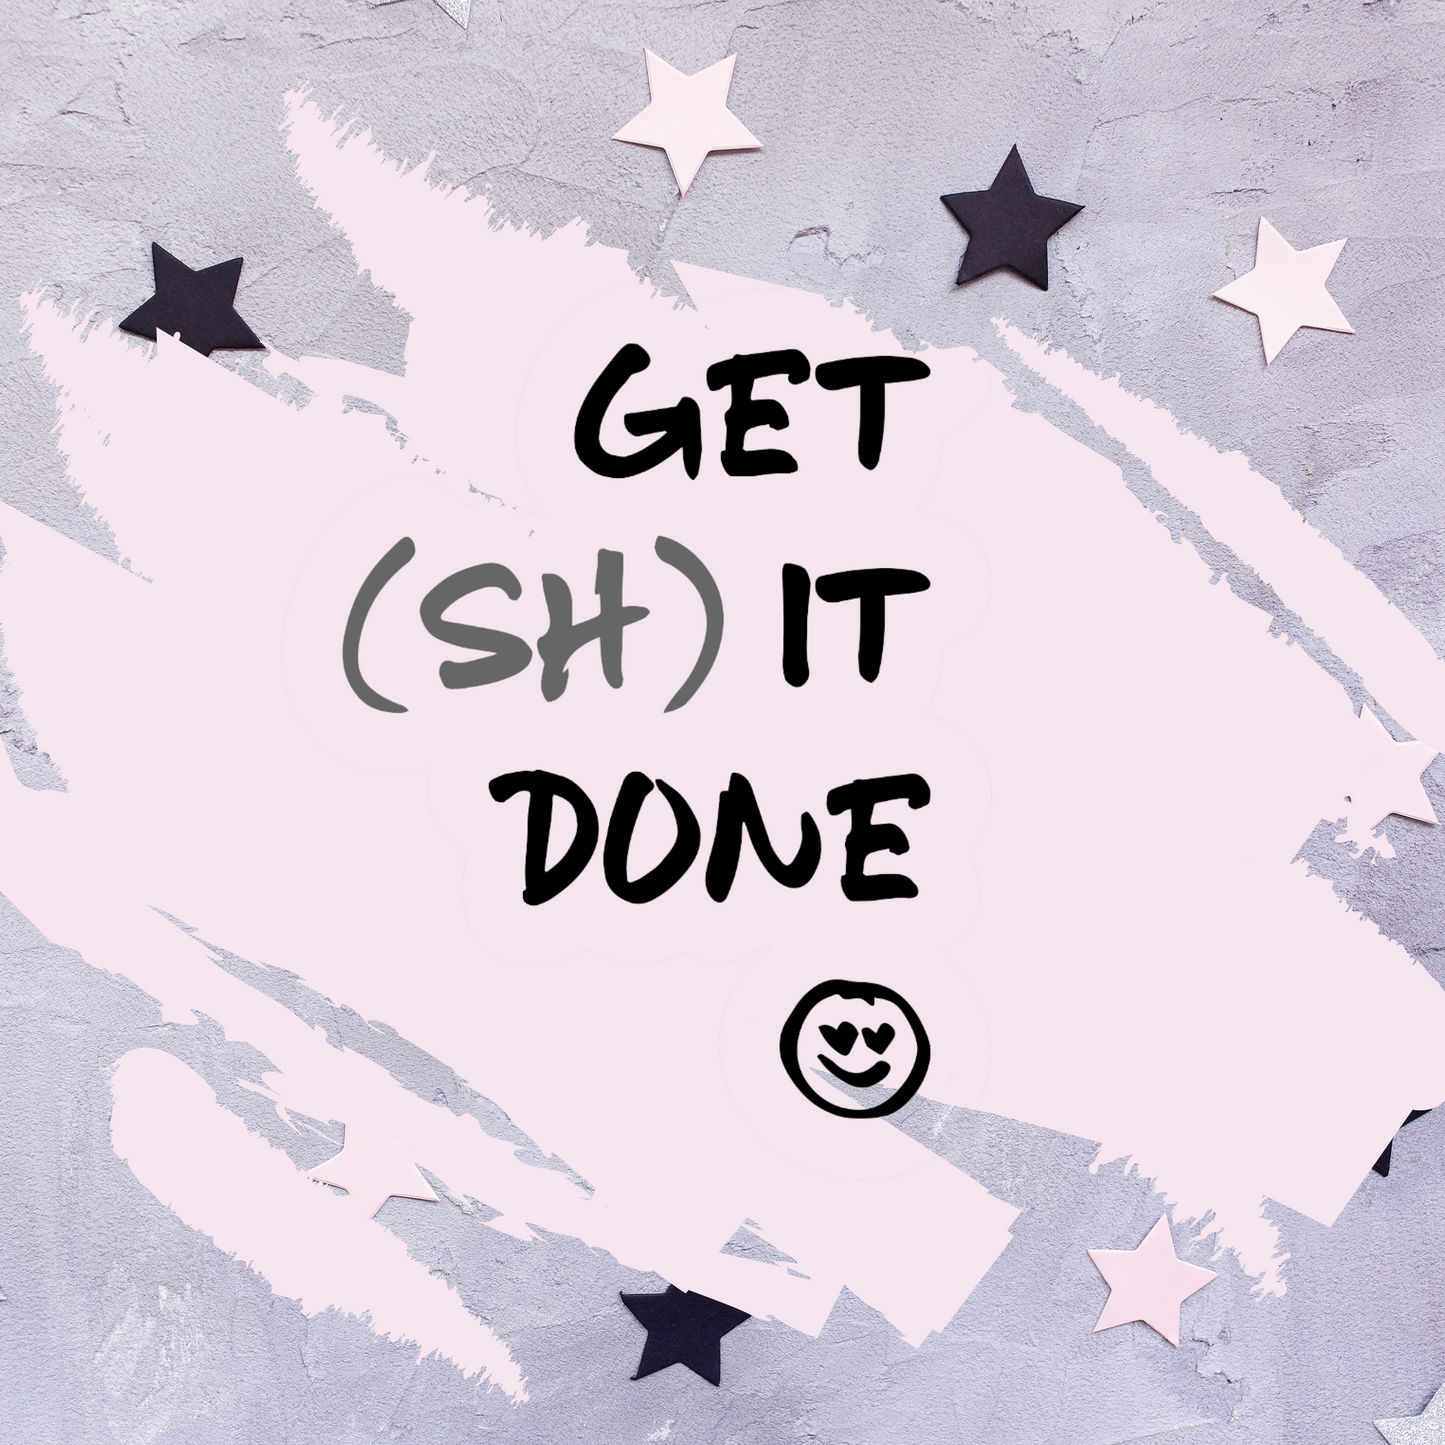 Get Shit Done, Swear Stickers, Planner Stickers, Motivation Stickers